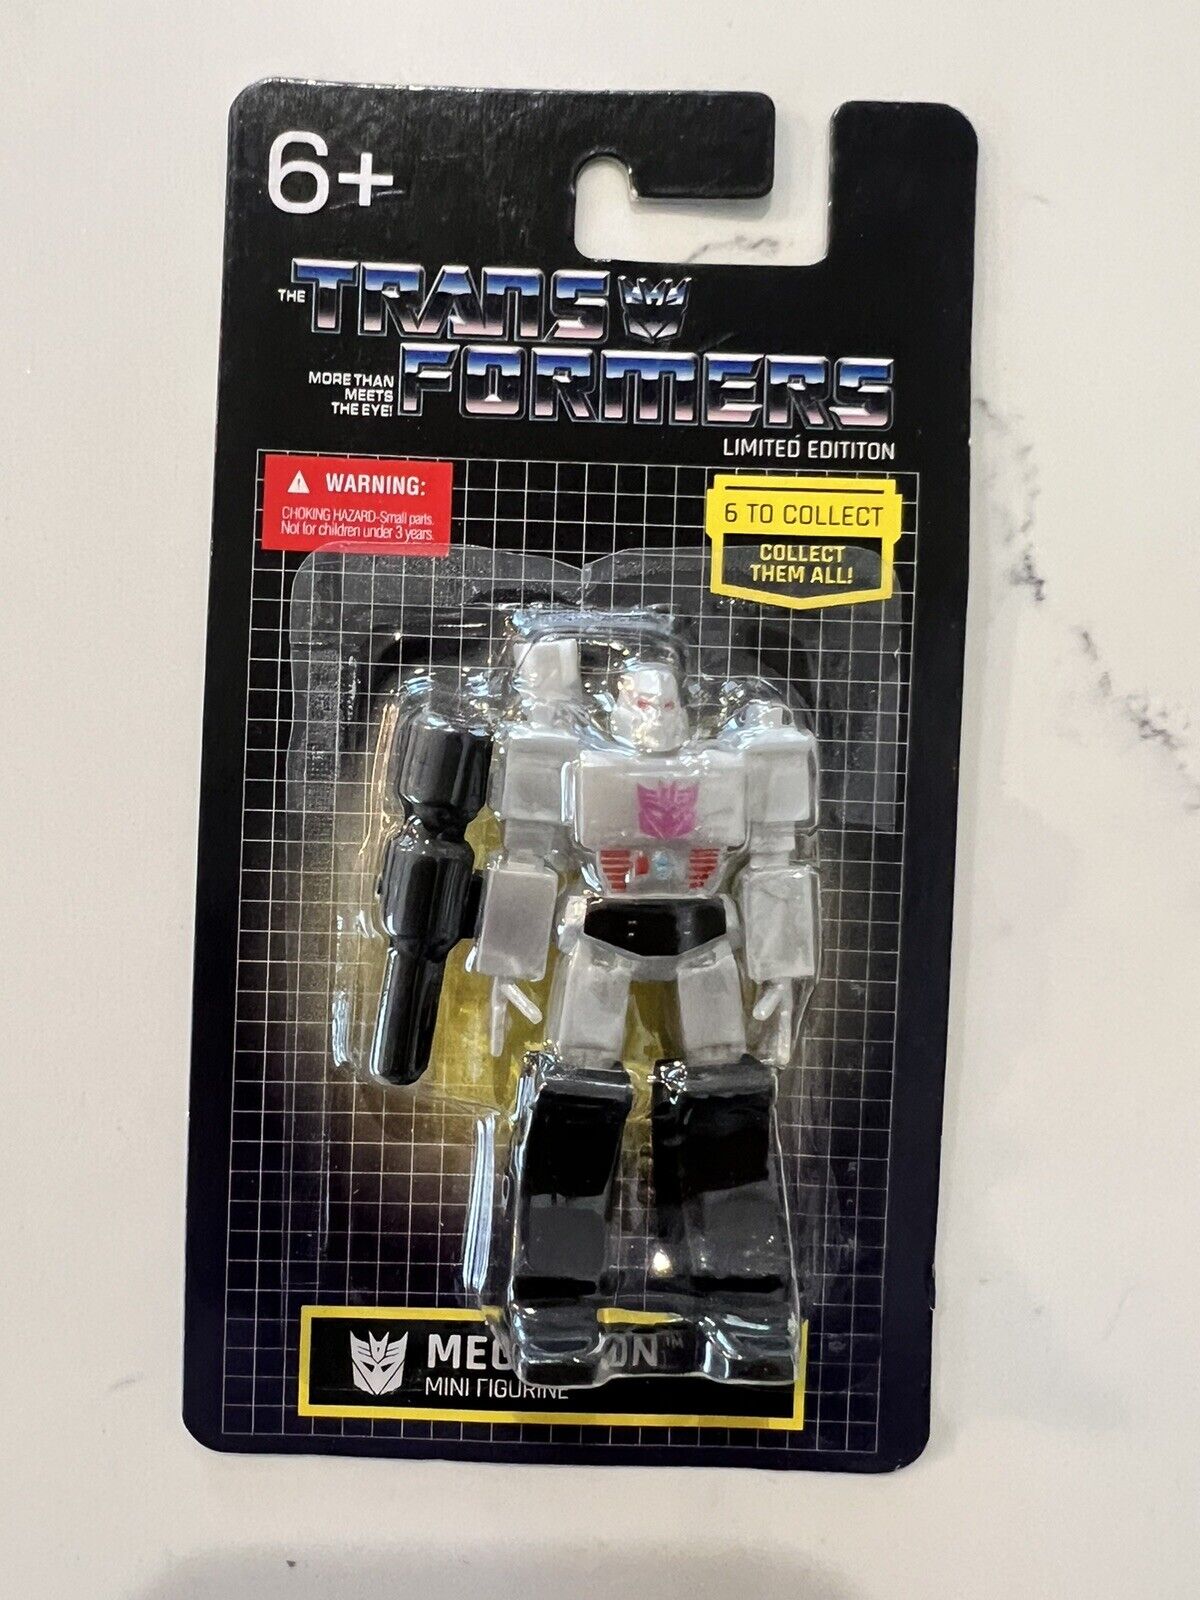 Transformers limited edition Mini Figure - Megatron new